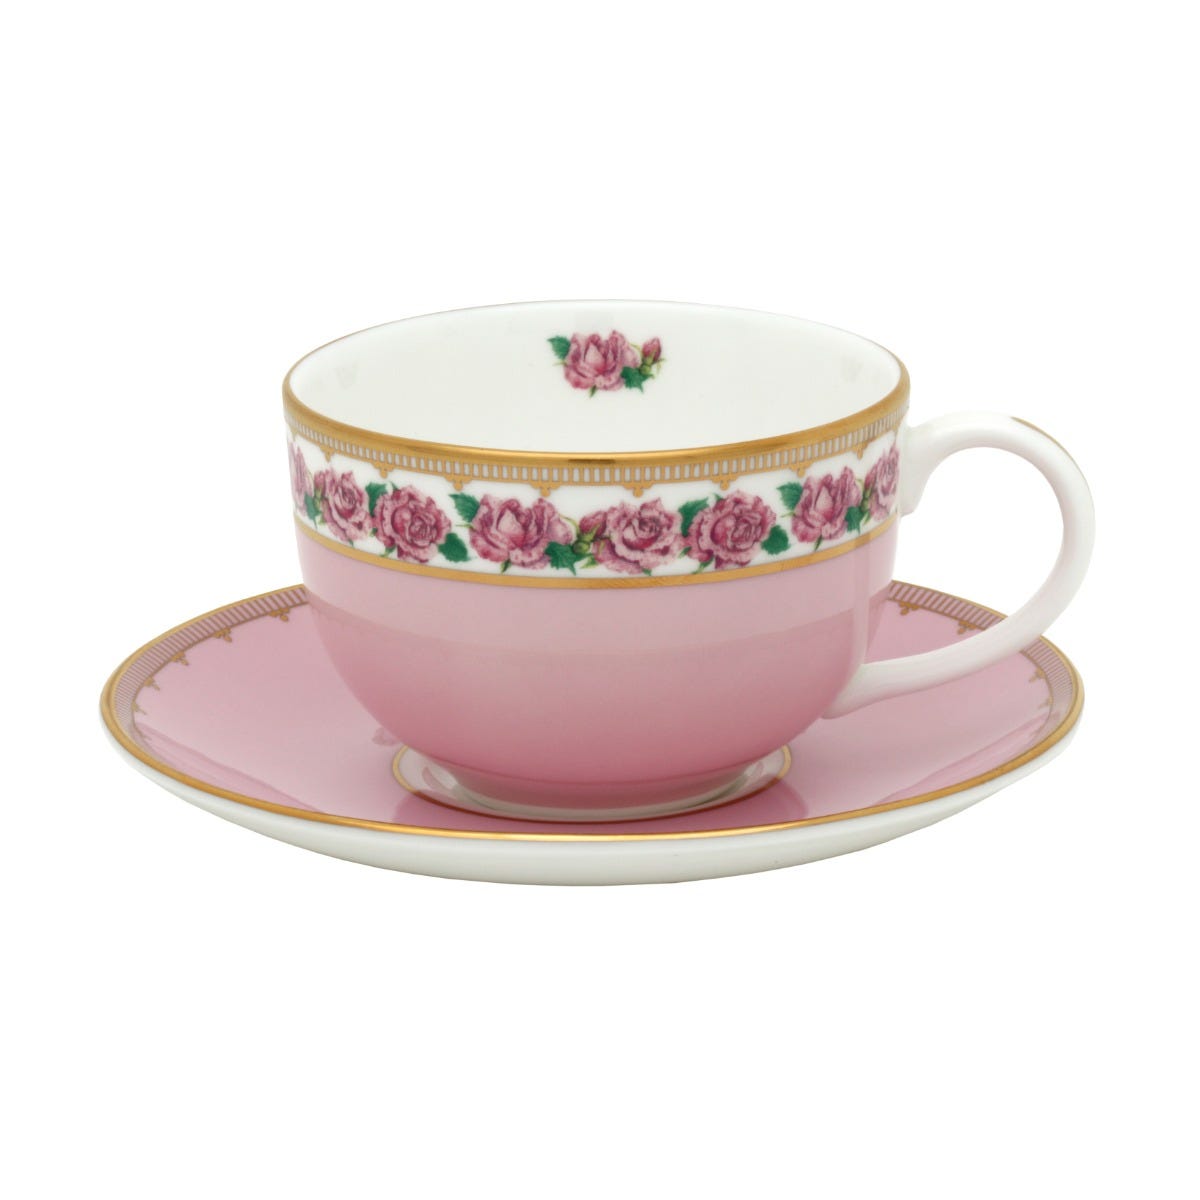 Castle of Mey Floral Rose Teacup & Saucer in Pink, Halcyon Days